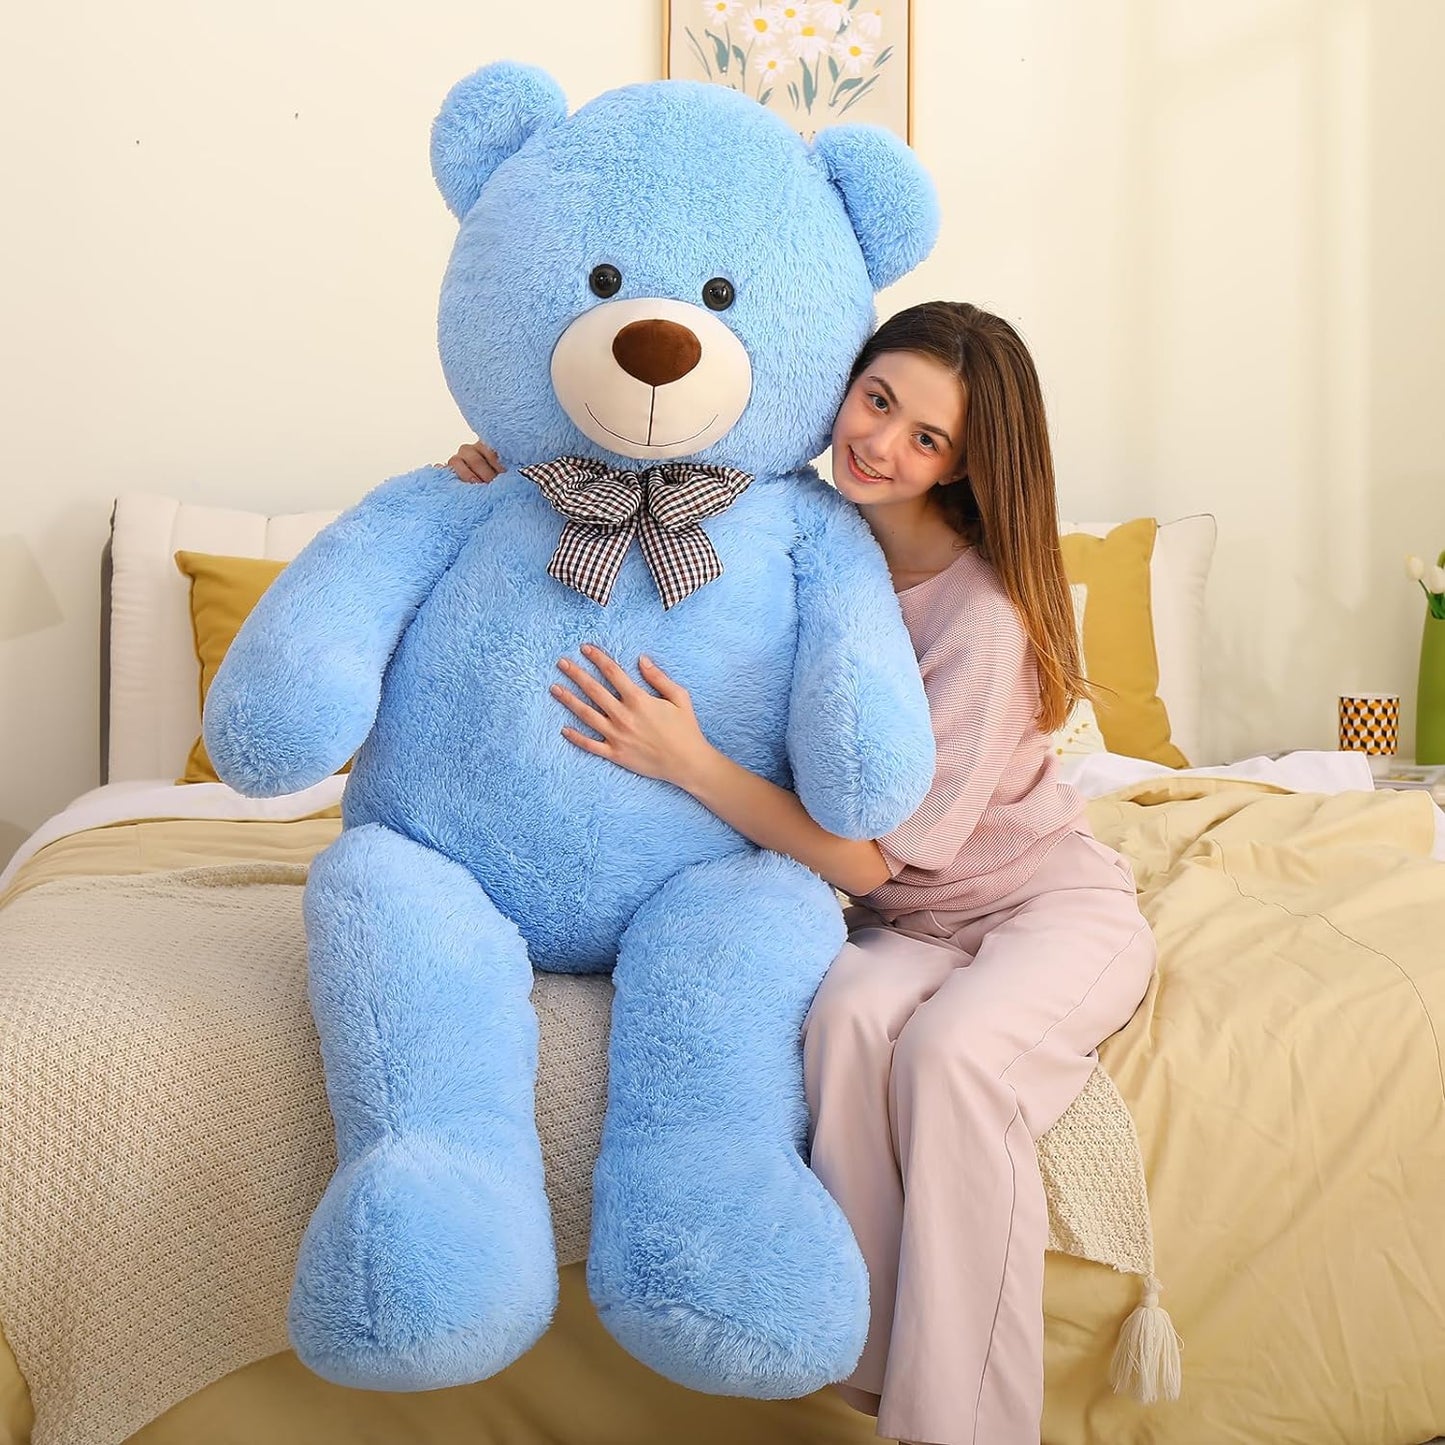 Giant Teddy Bear Stuffed Animal Toy, Blue, 55 Inches - MorisMos Plush Toys